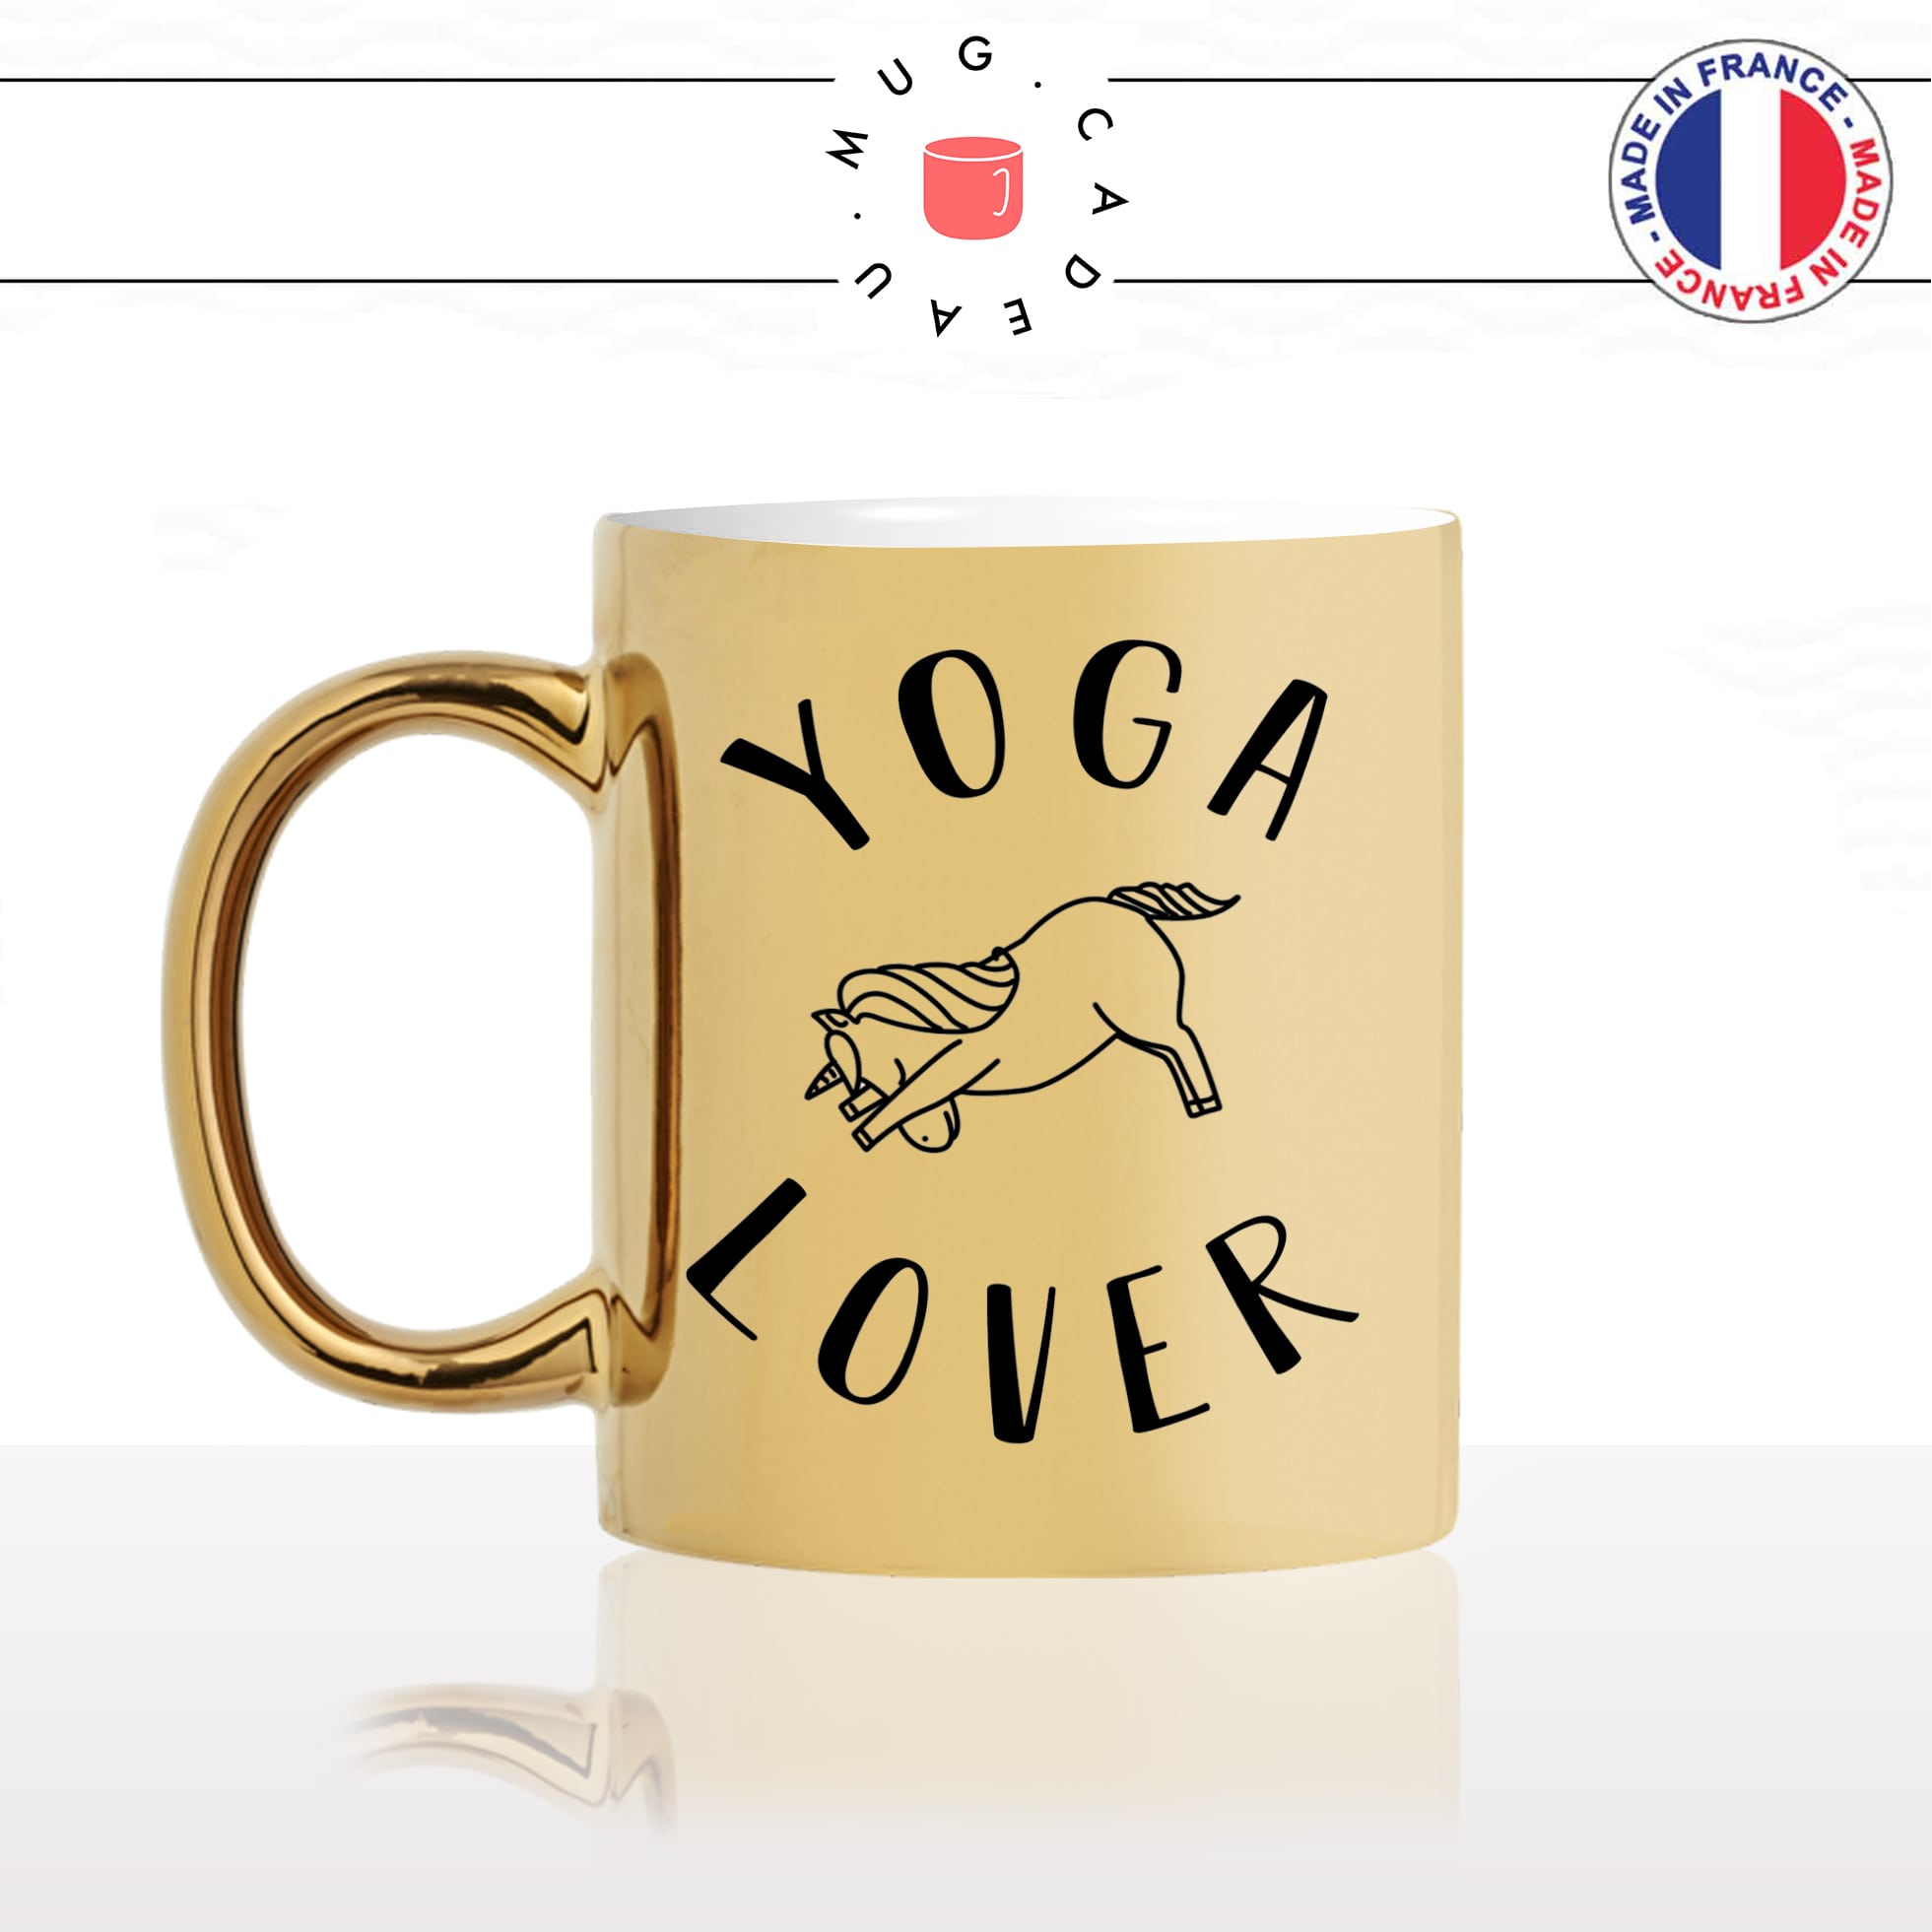 mug-tasse-or-doré-licorne-pose-yoga-lover-sport-pilate-meditation-mignon-animal-noir-fun-café-thé-idée-cadeau-original-personnalisé-gold-min